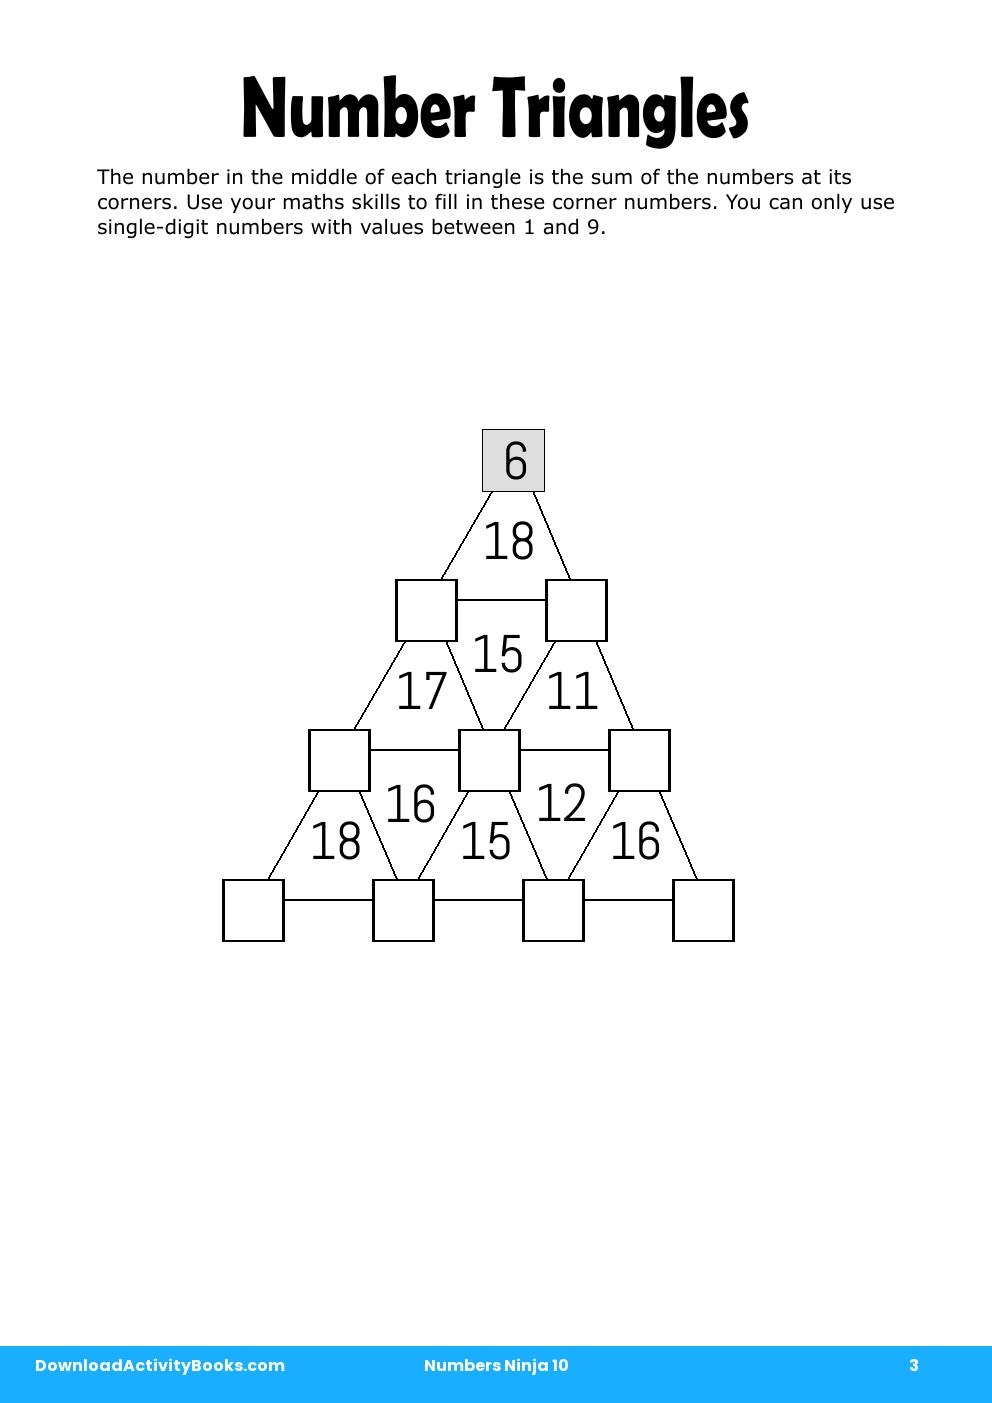 Number Triangles in Numbers Ninja 10